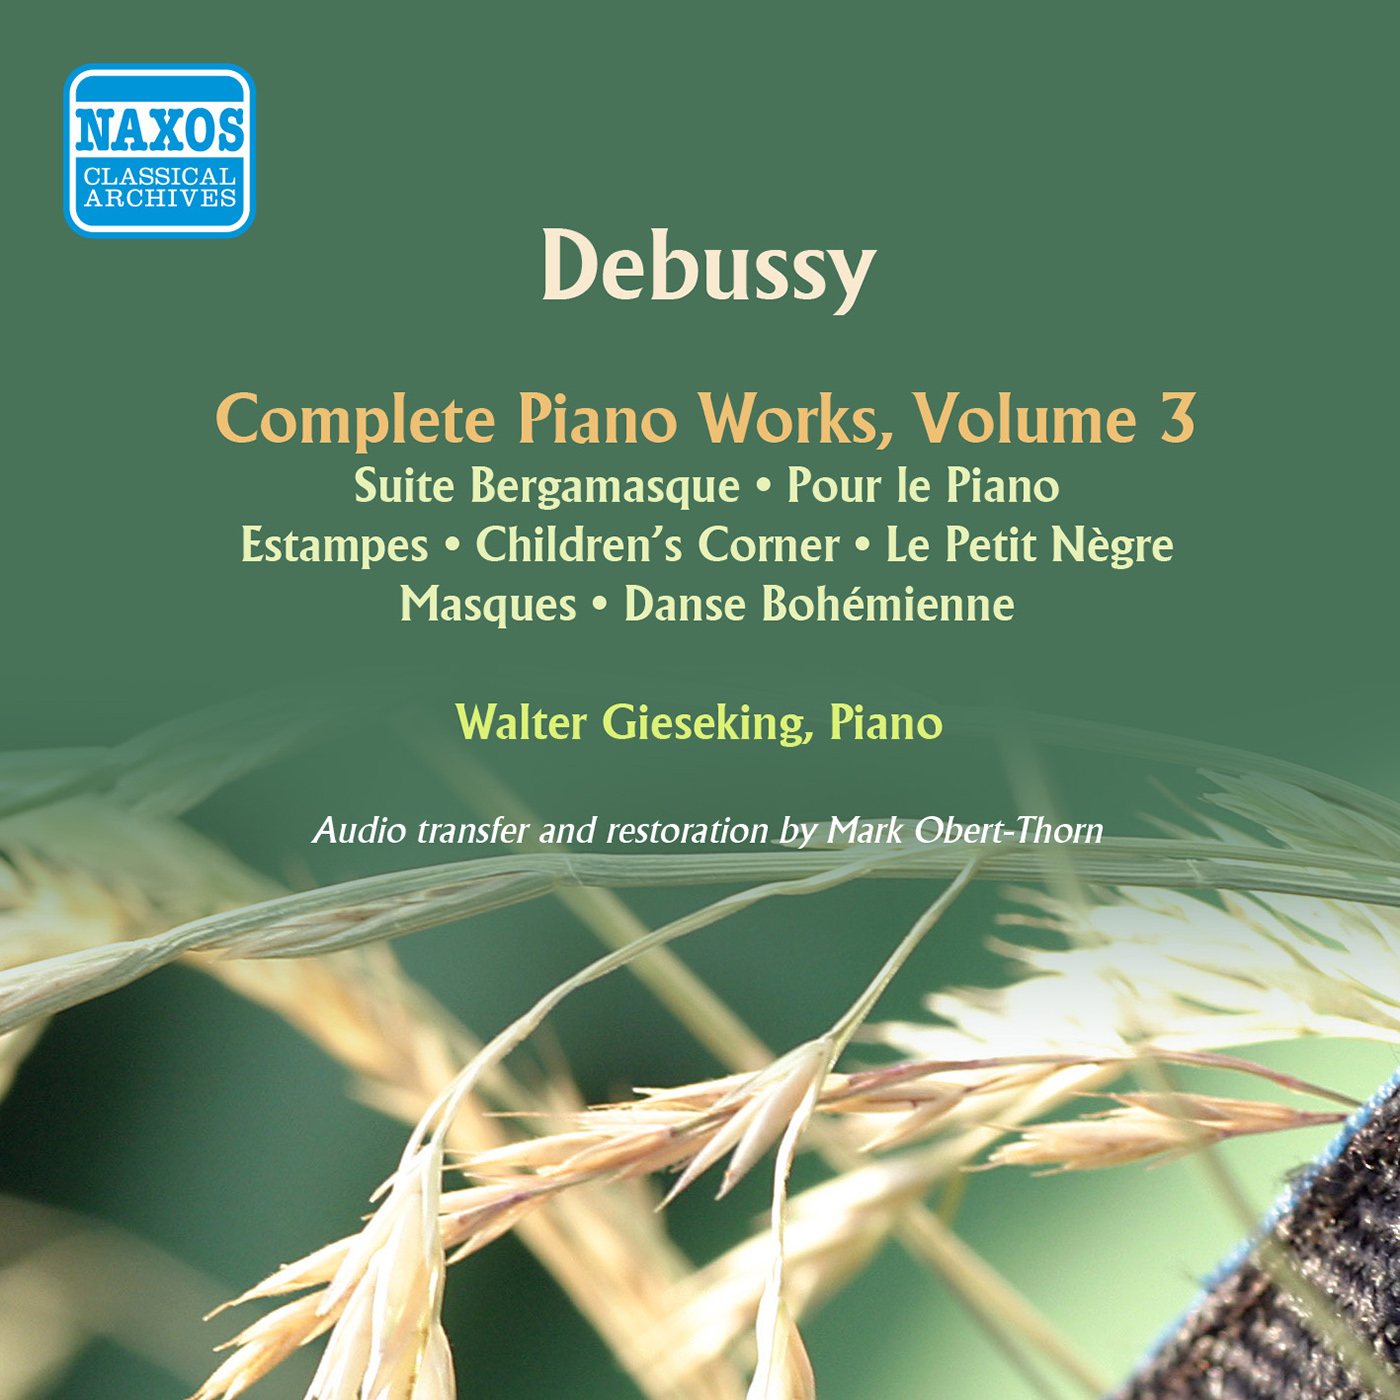 DEBUSSY, C.: Piano Works (Complete), Vol. 3 - Suite bergamasque / Pour le piano / Estampes / Children's Corner (Gieseking) (1953)